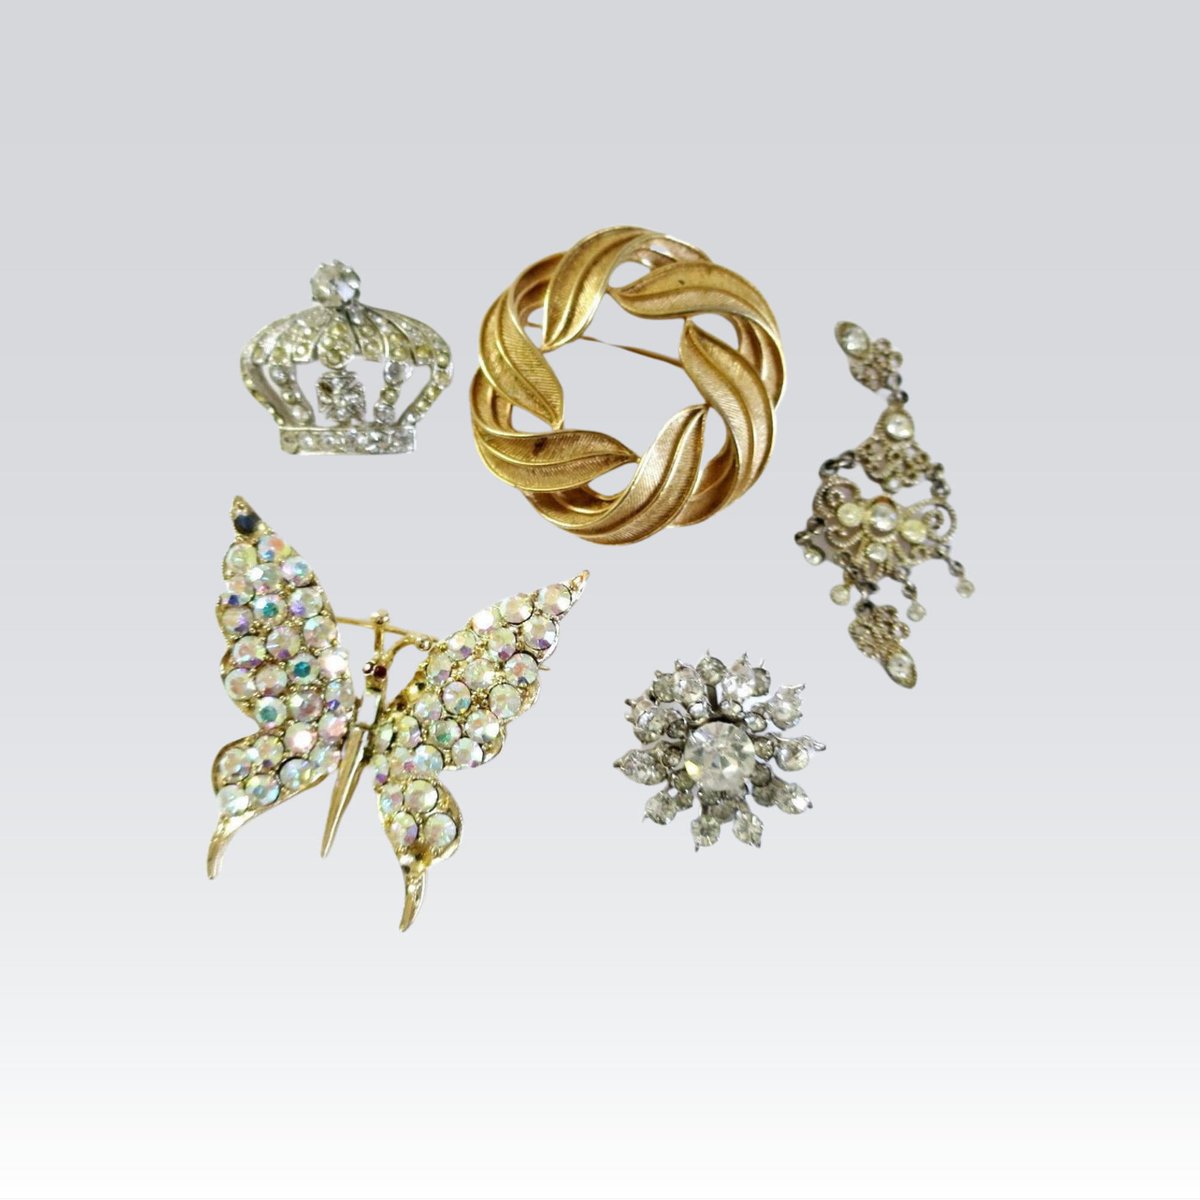 Vintage Jewelry Lot for Crafts, Trifari Gold Swirl Leaf, Wedding Bouquet, Gifting, Crafting tuppu.net/30790da3 #SwirlingOrange11 #Etsy